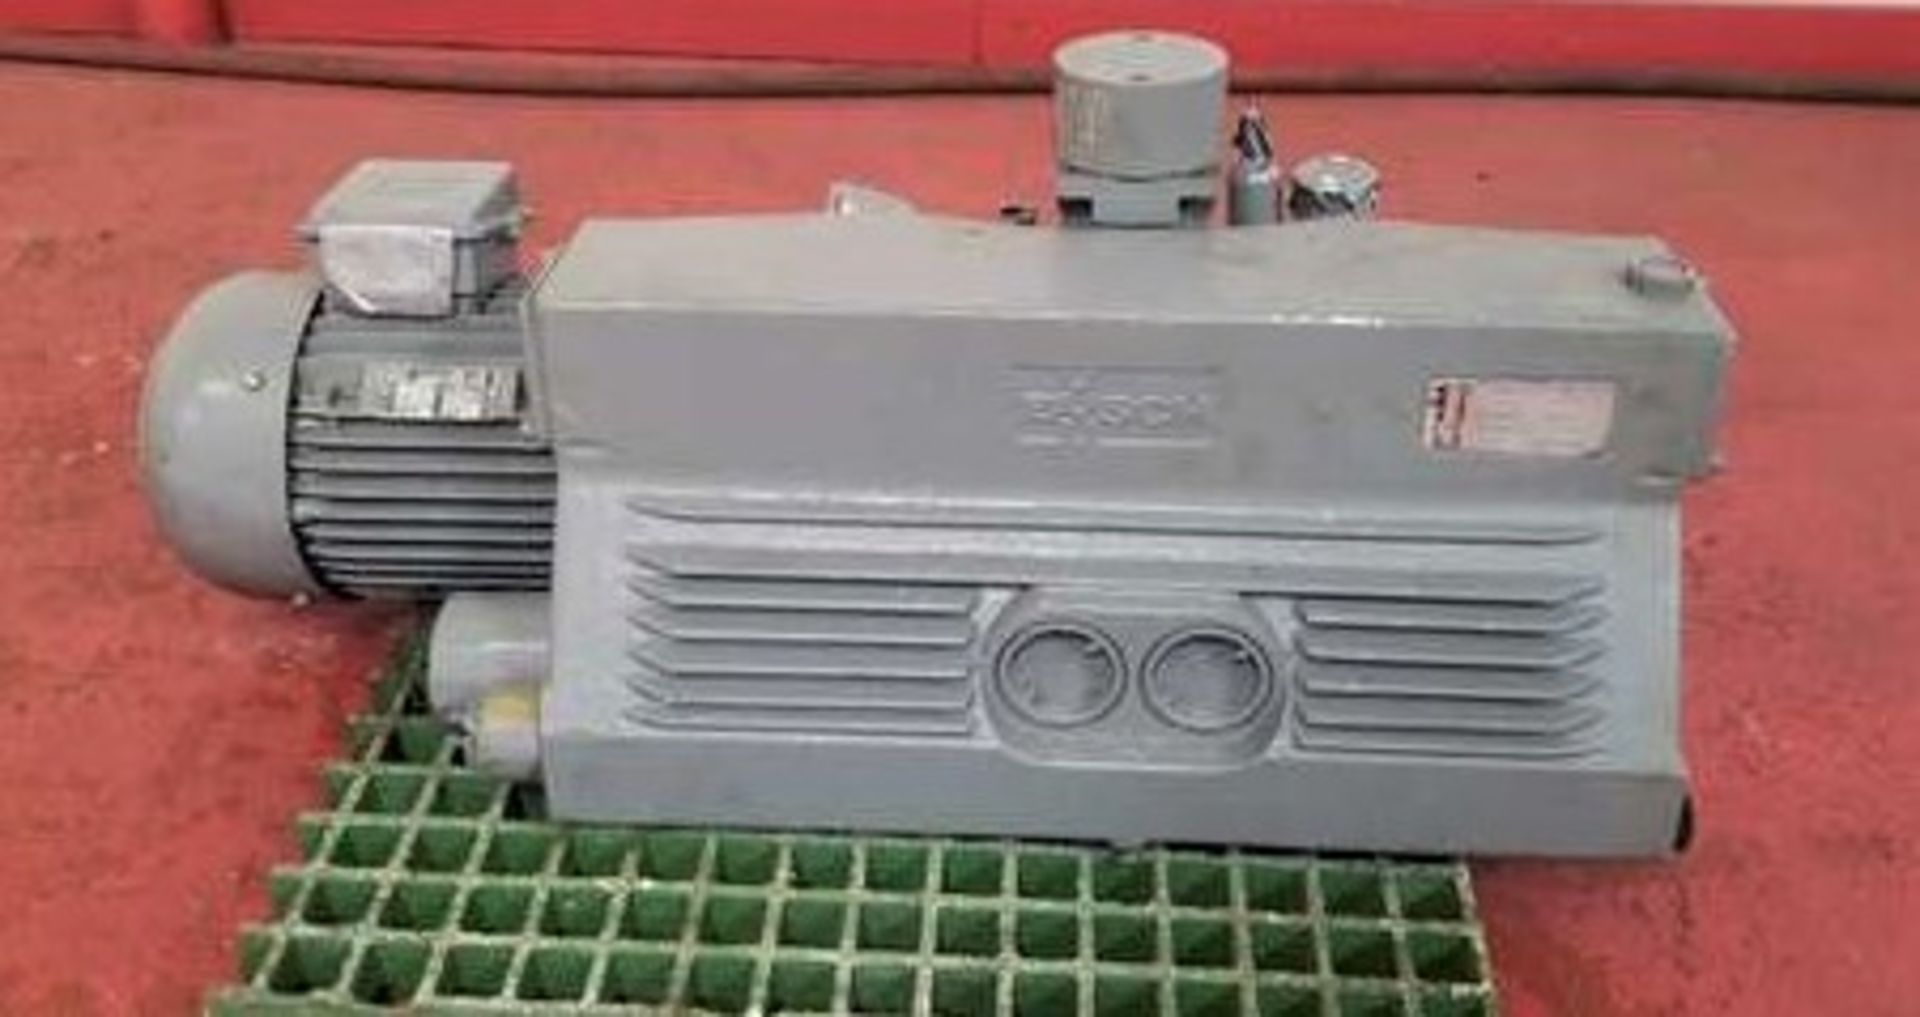 Busch RAO 100 Vacuum pump. Pulls and holds 27" vacuum. Mdl: RAO 0100 B 523. S/N: 362529/CCZZ/K1.